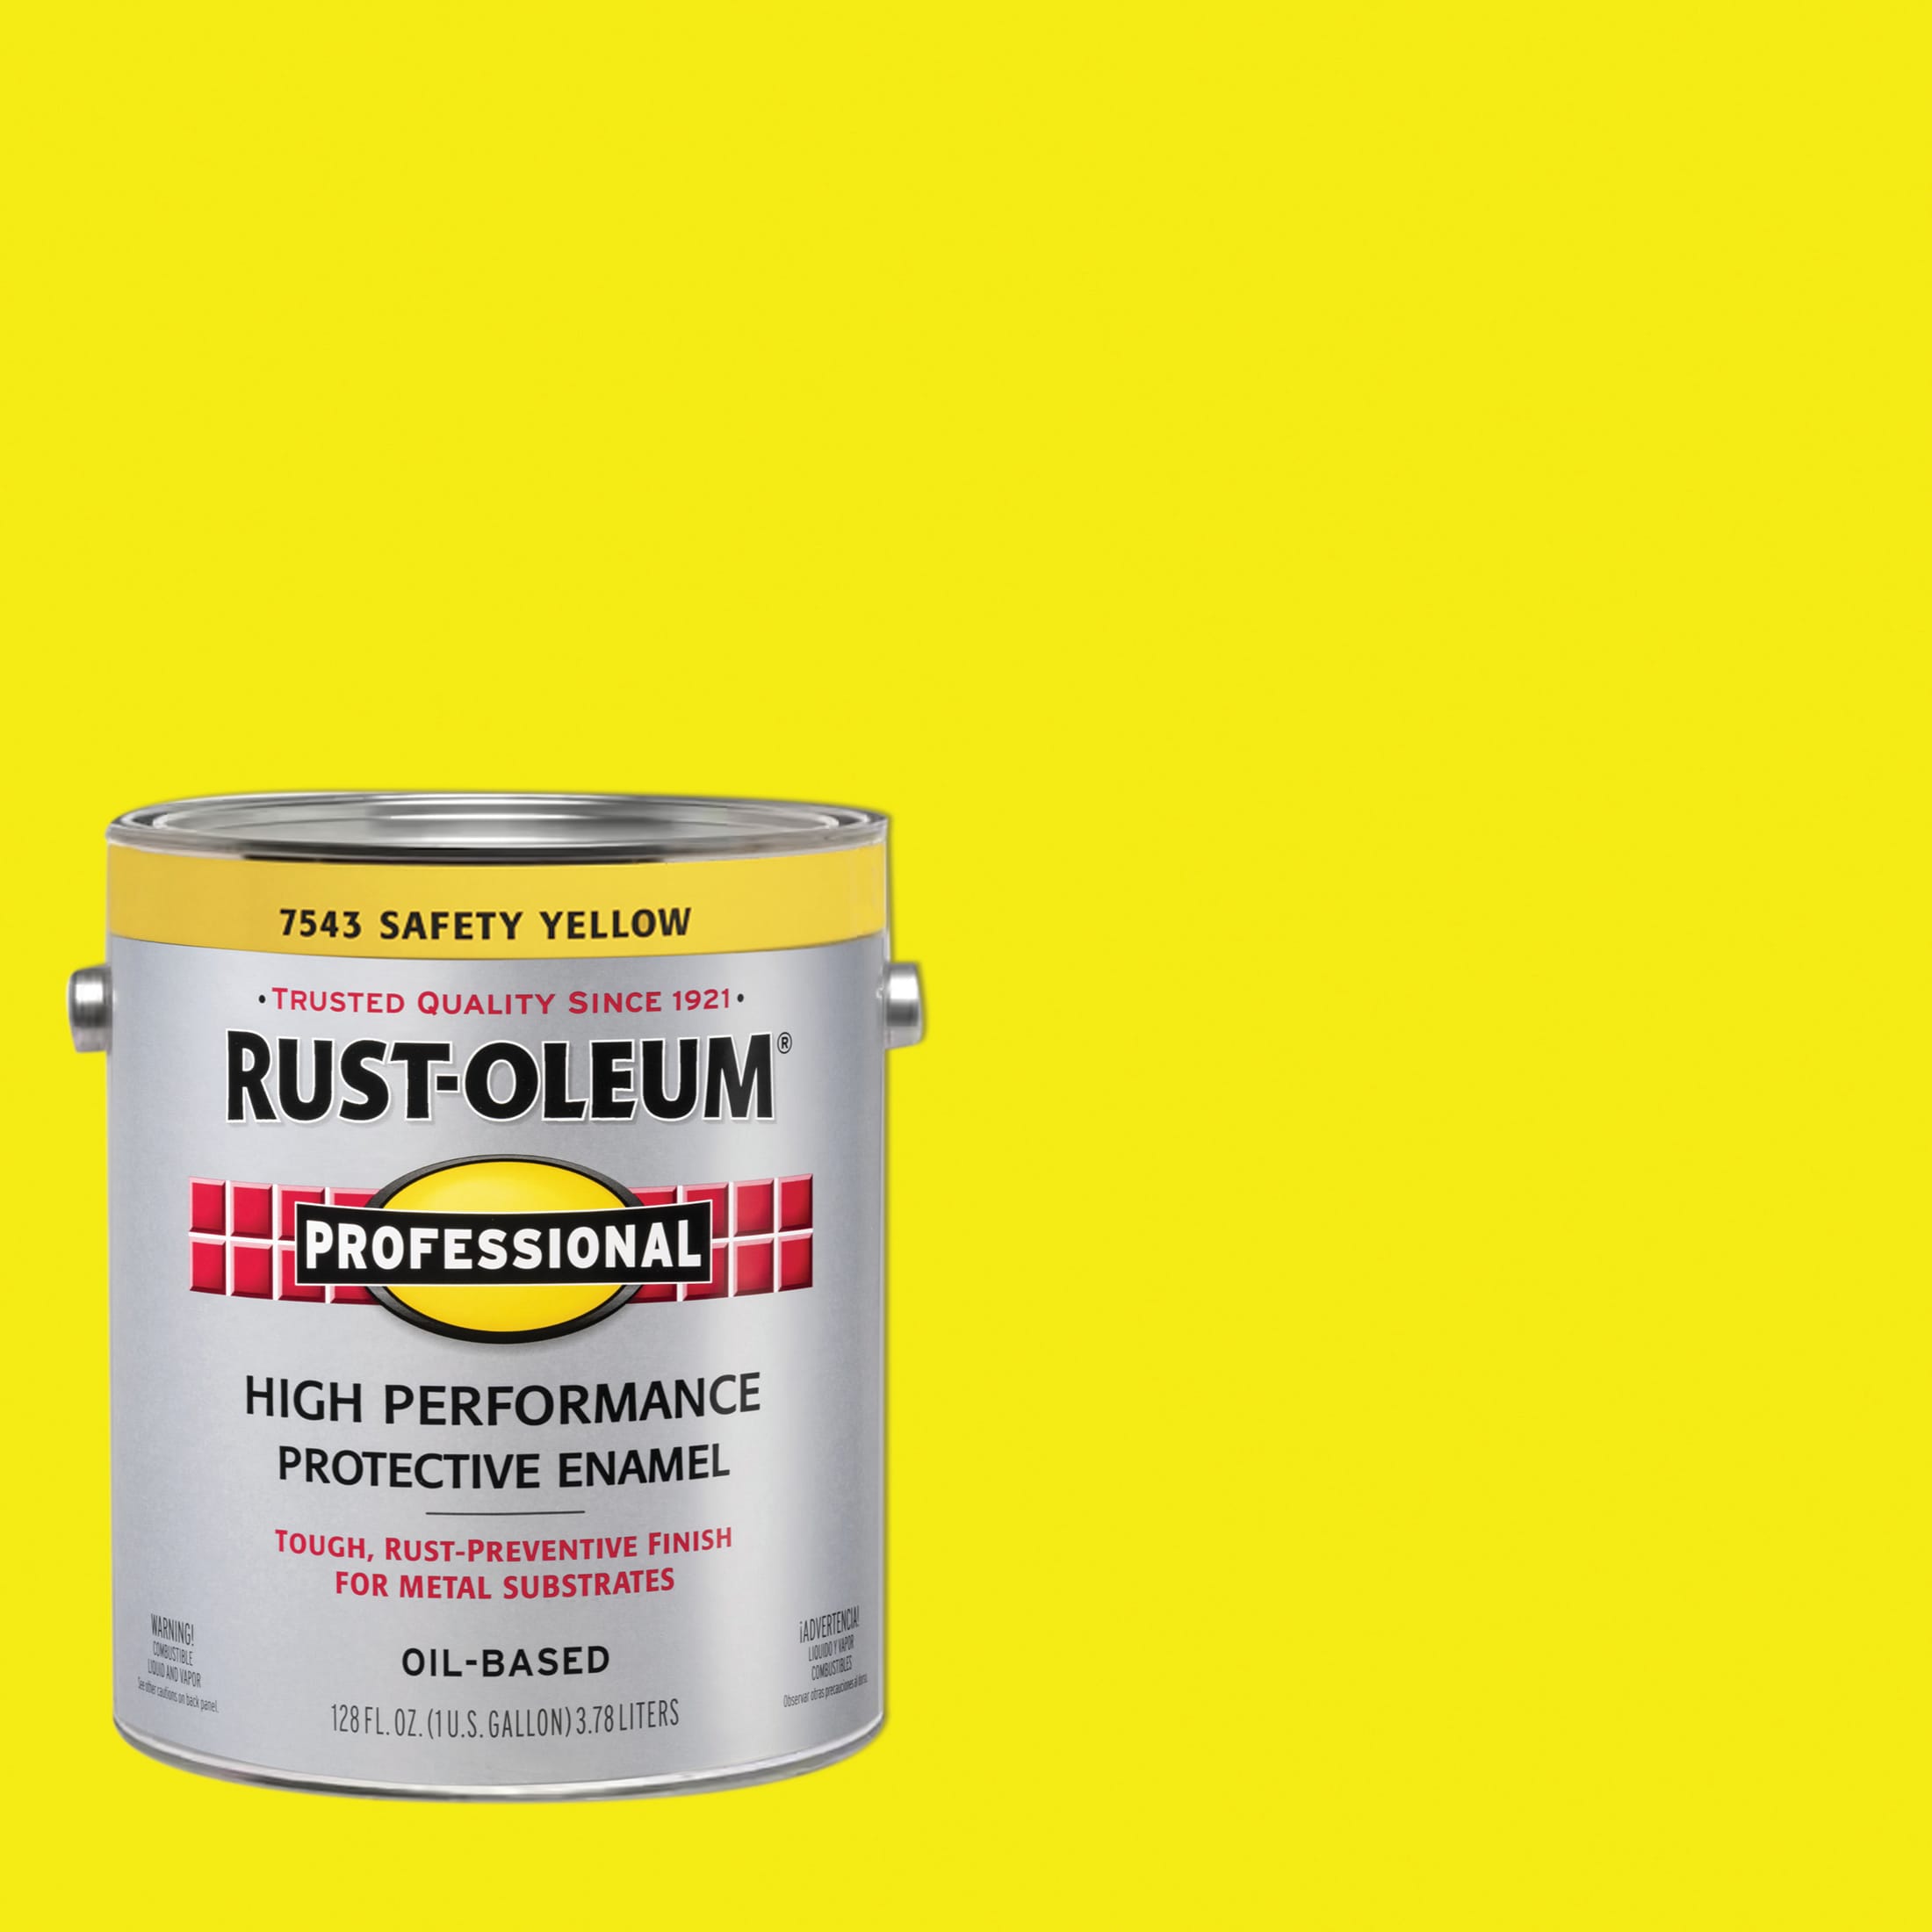 Rust-Oleum Professional 1 gal. High Performance Protective Enamel